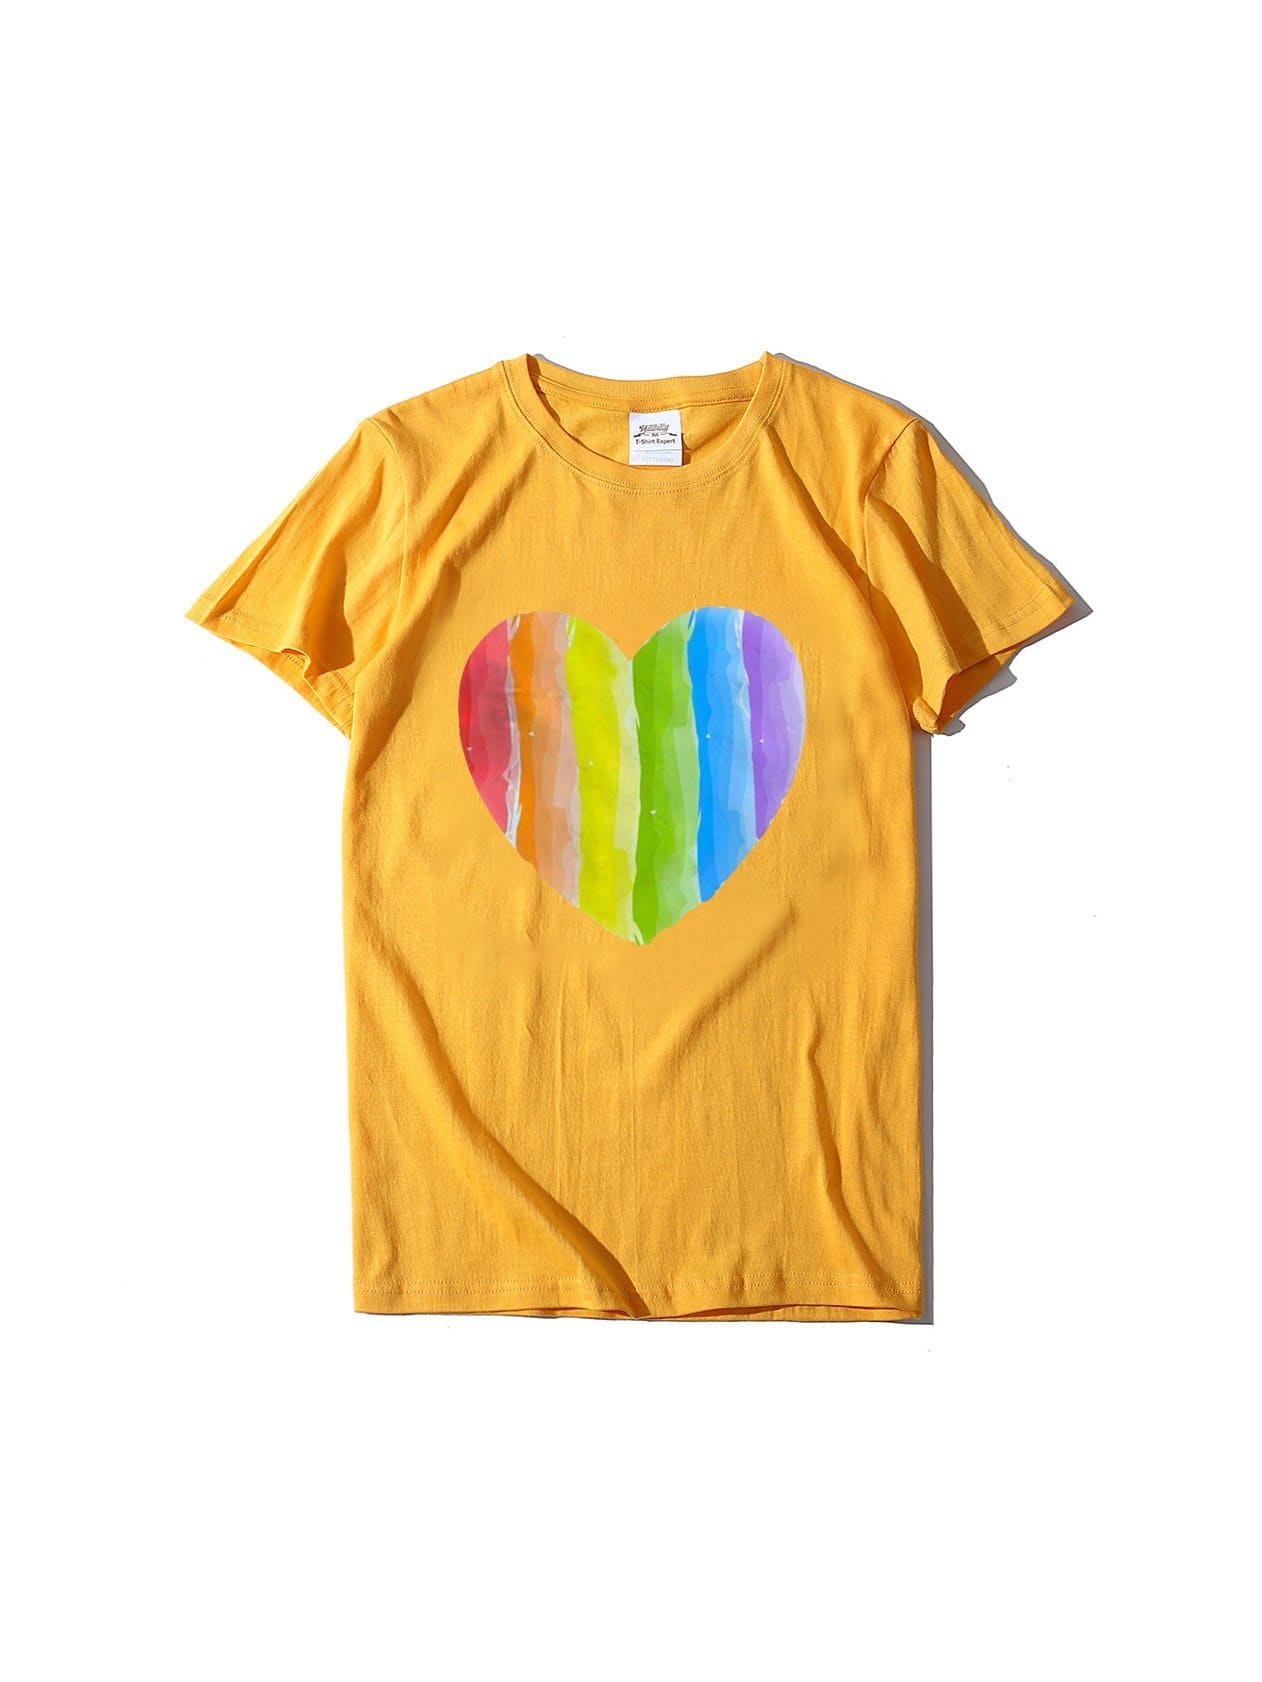 lovevop Casual Fashion Versatile Heart Print Women T-Shirt